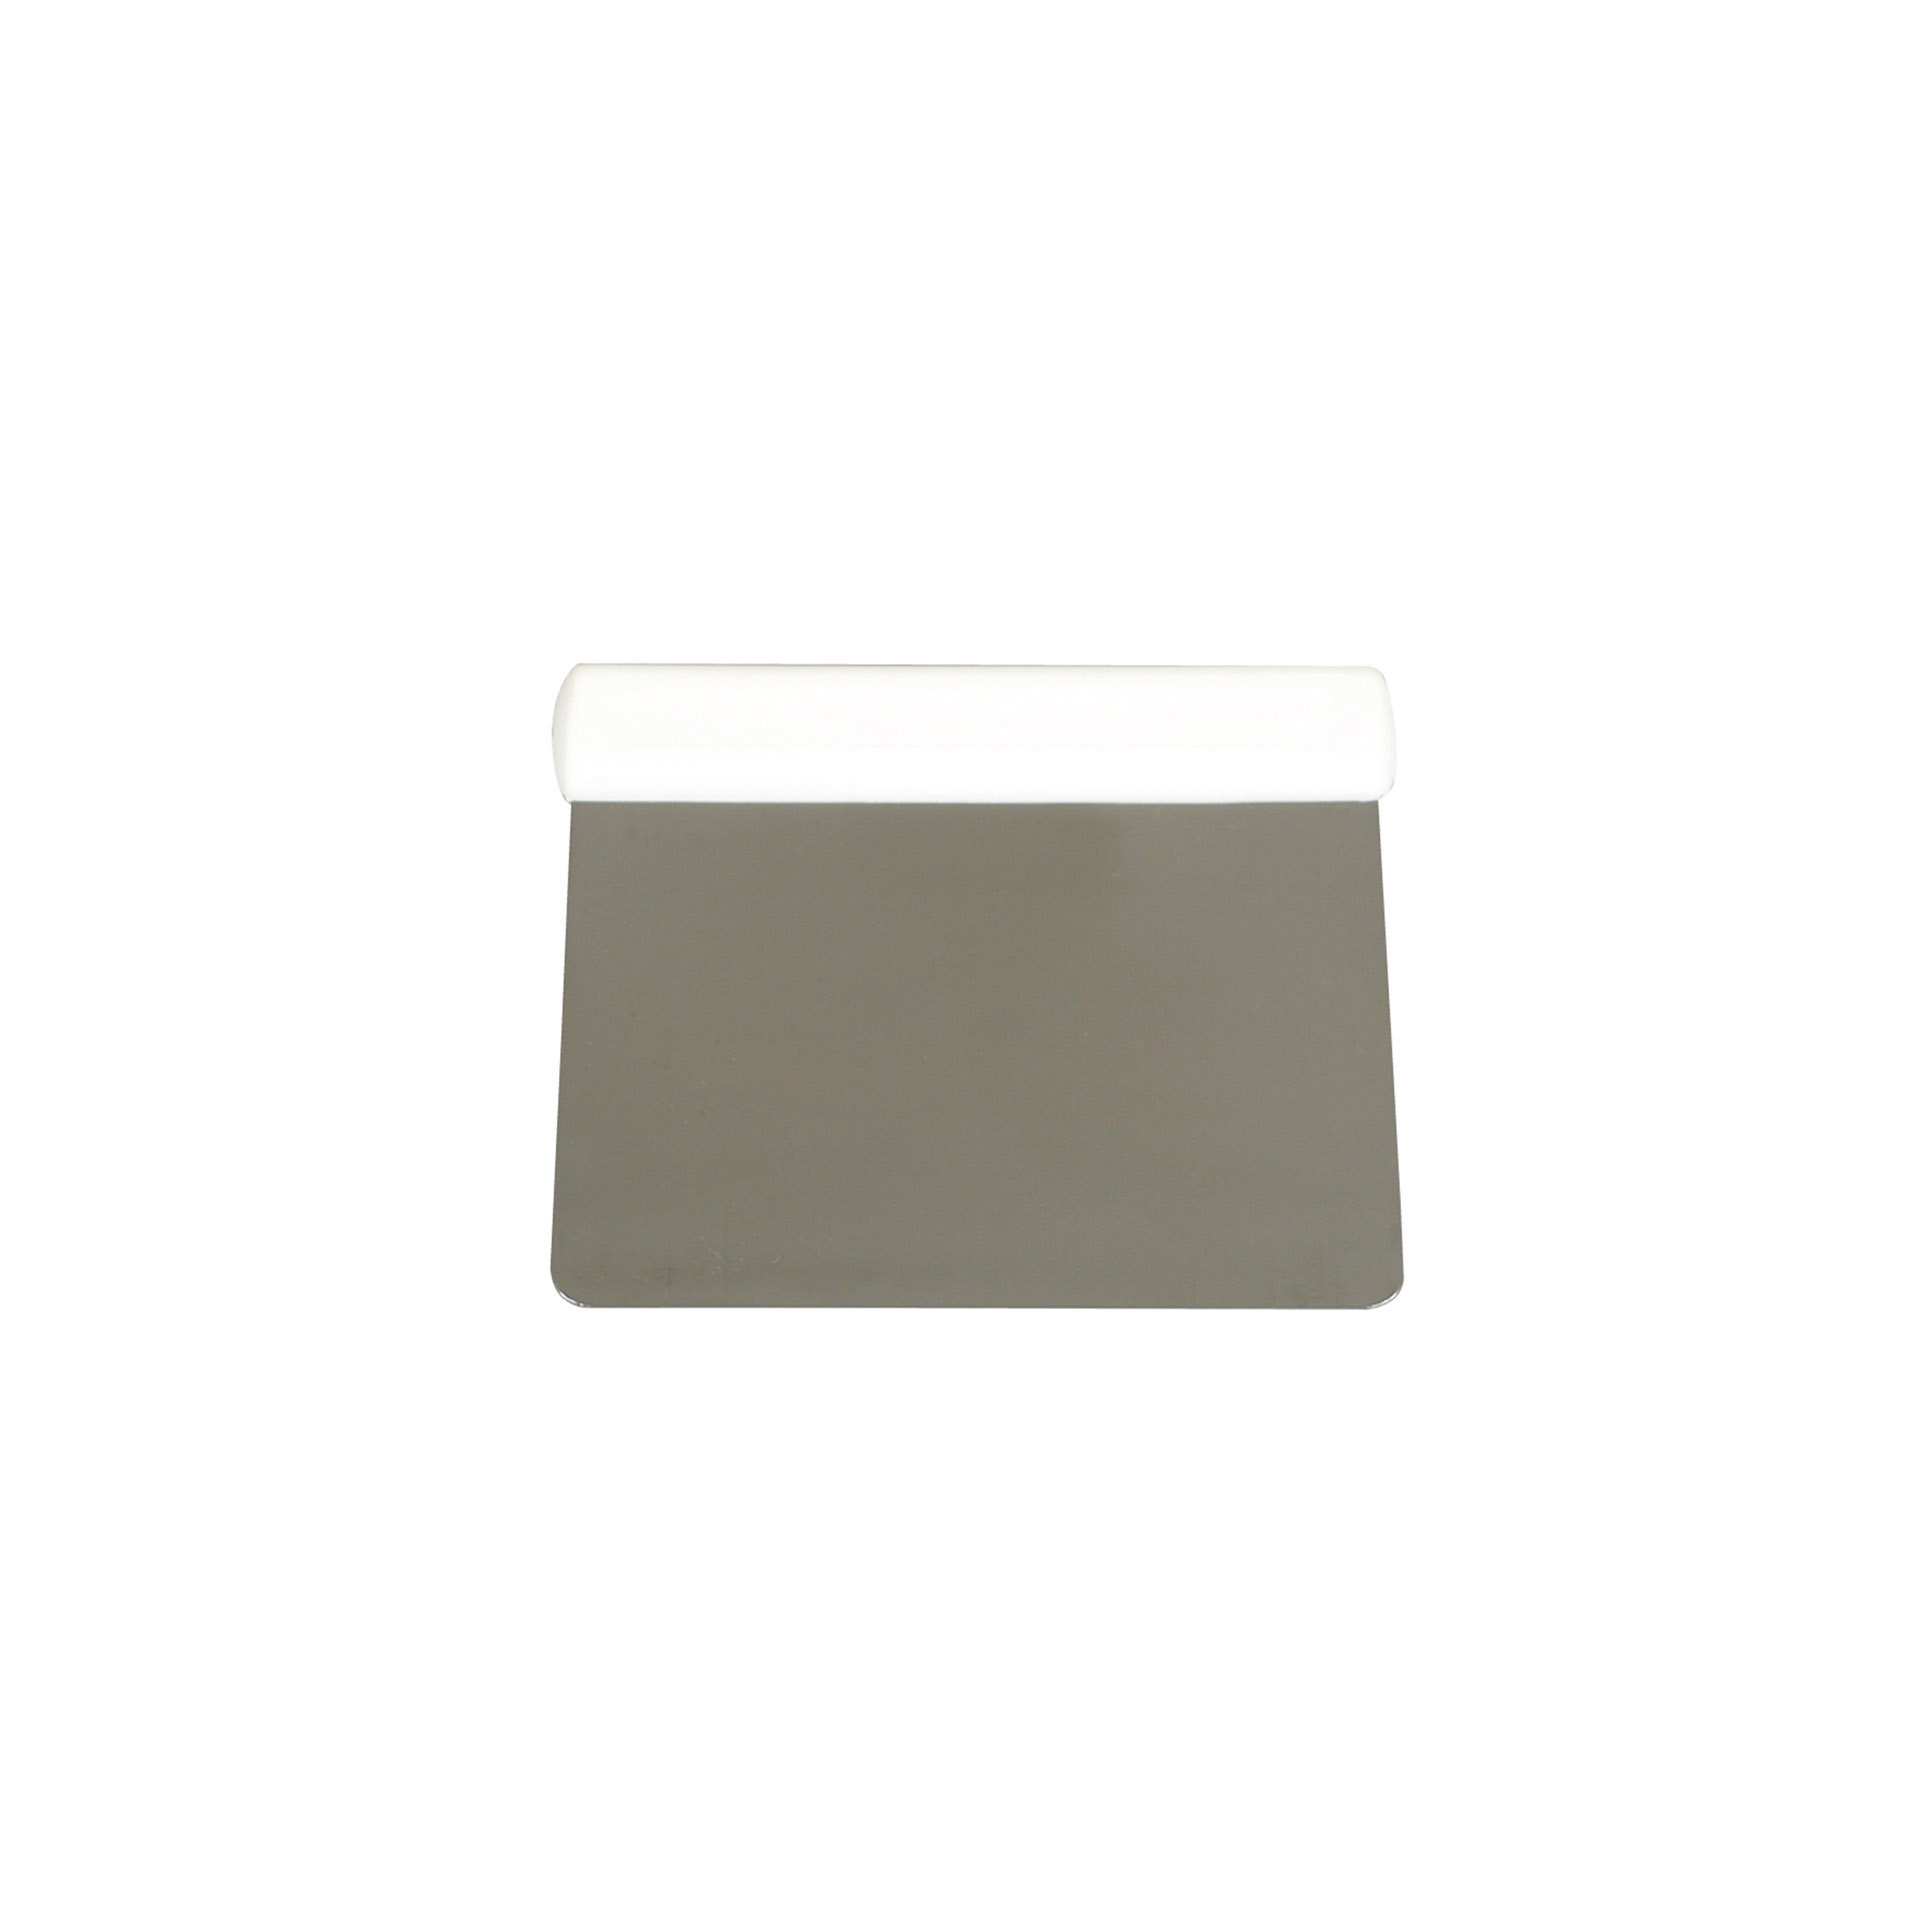 Abstecher - flexilbe Klinge - weiß - Abm. 12,5 x 11,0 x 0,8 cm - Edelstahl - 199070-C